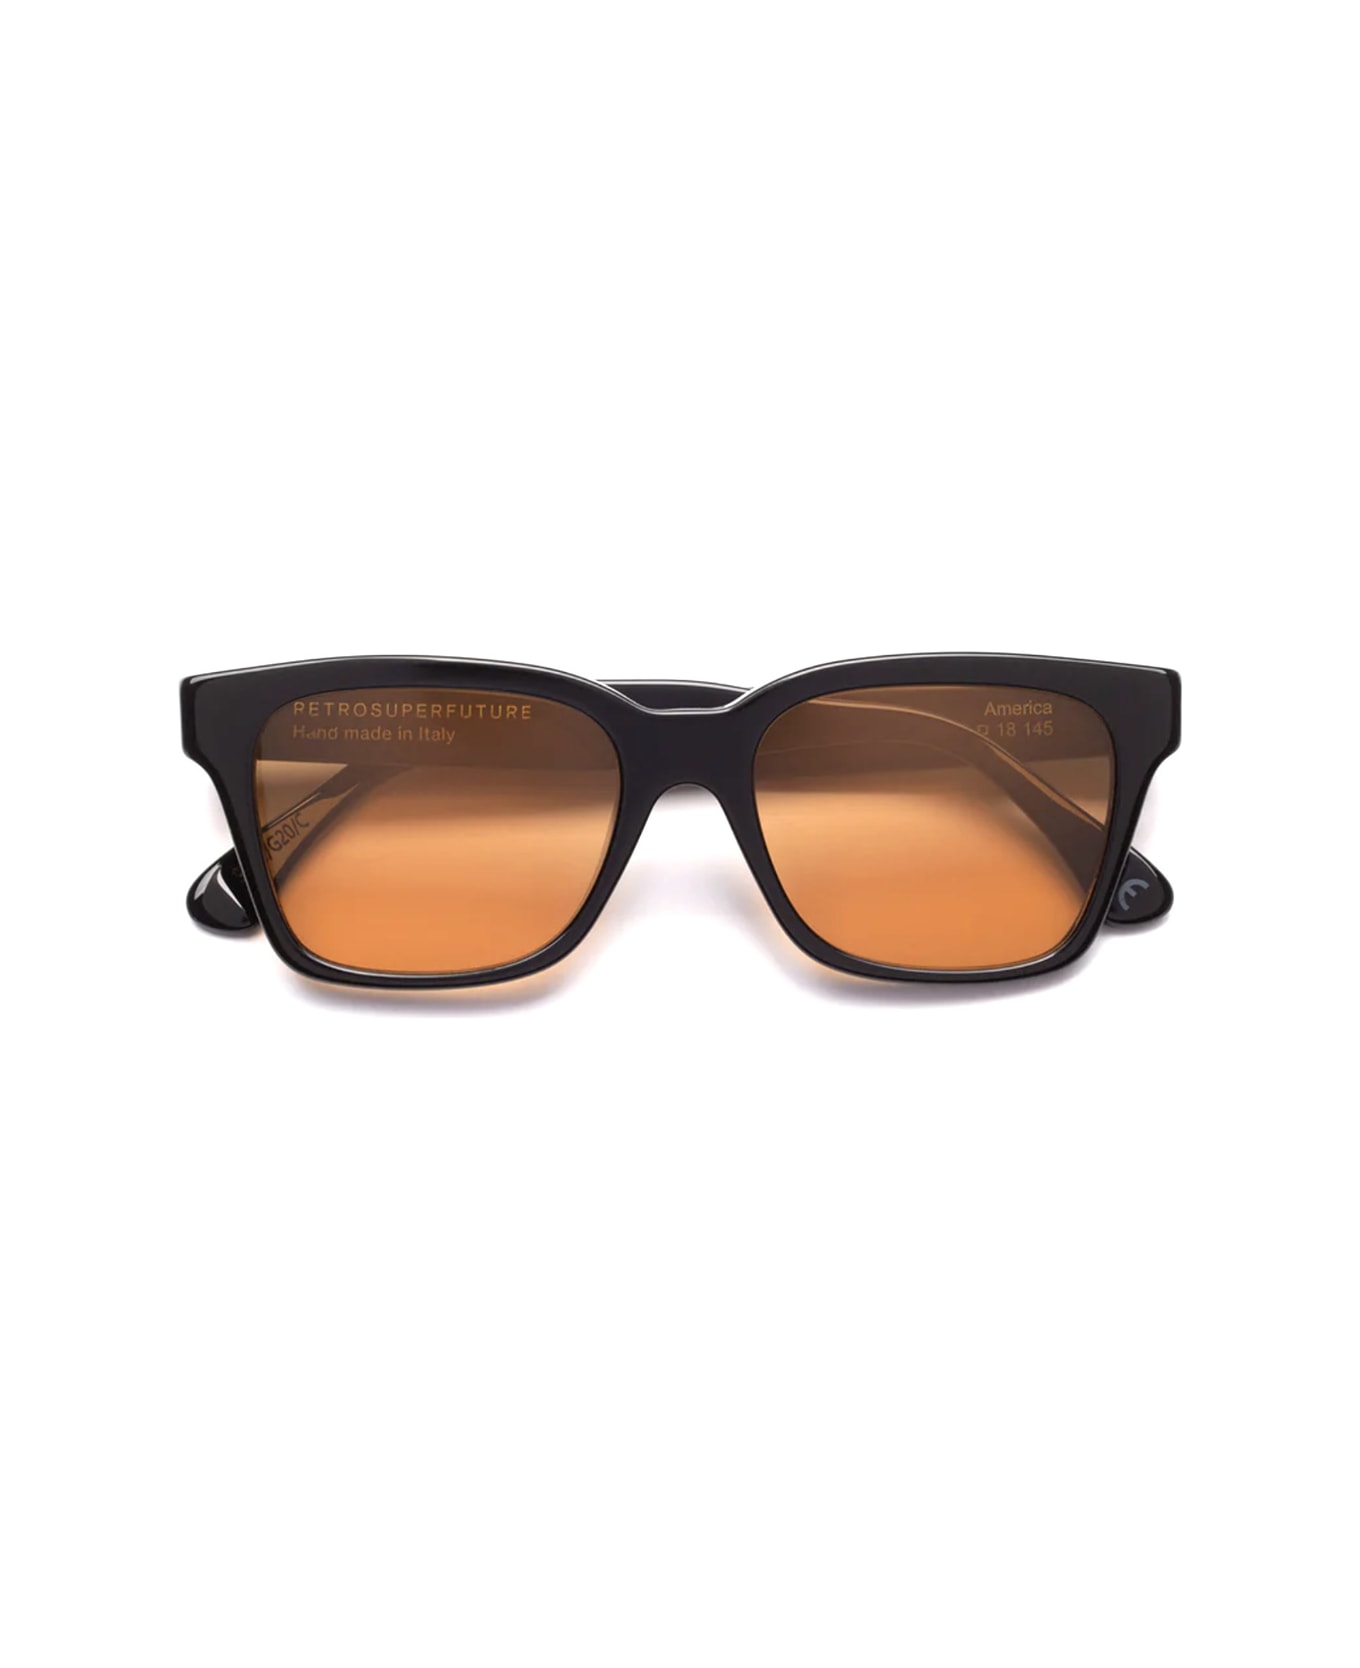 RETROSUPERFUTURE America Refined Black Sunglasses - Nero サングラス